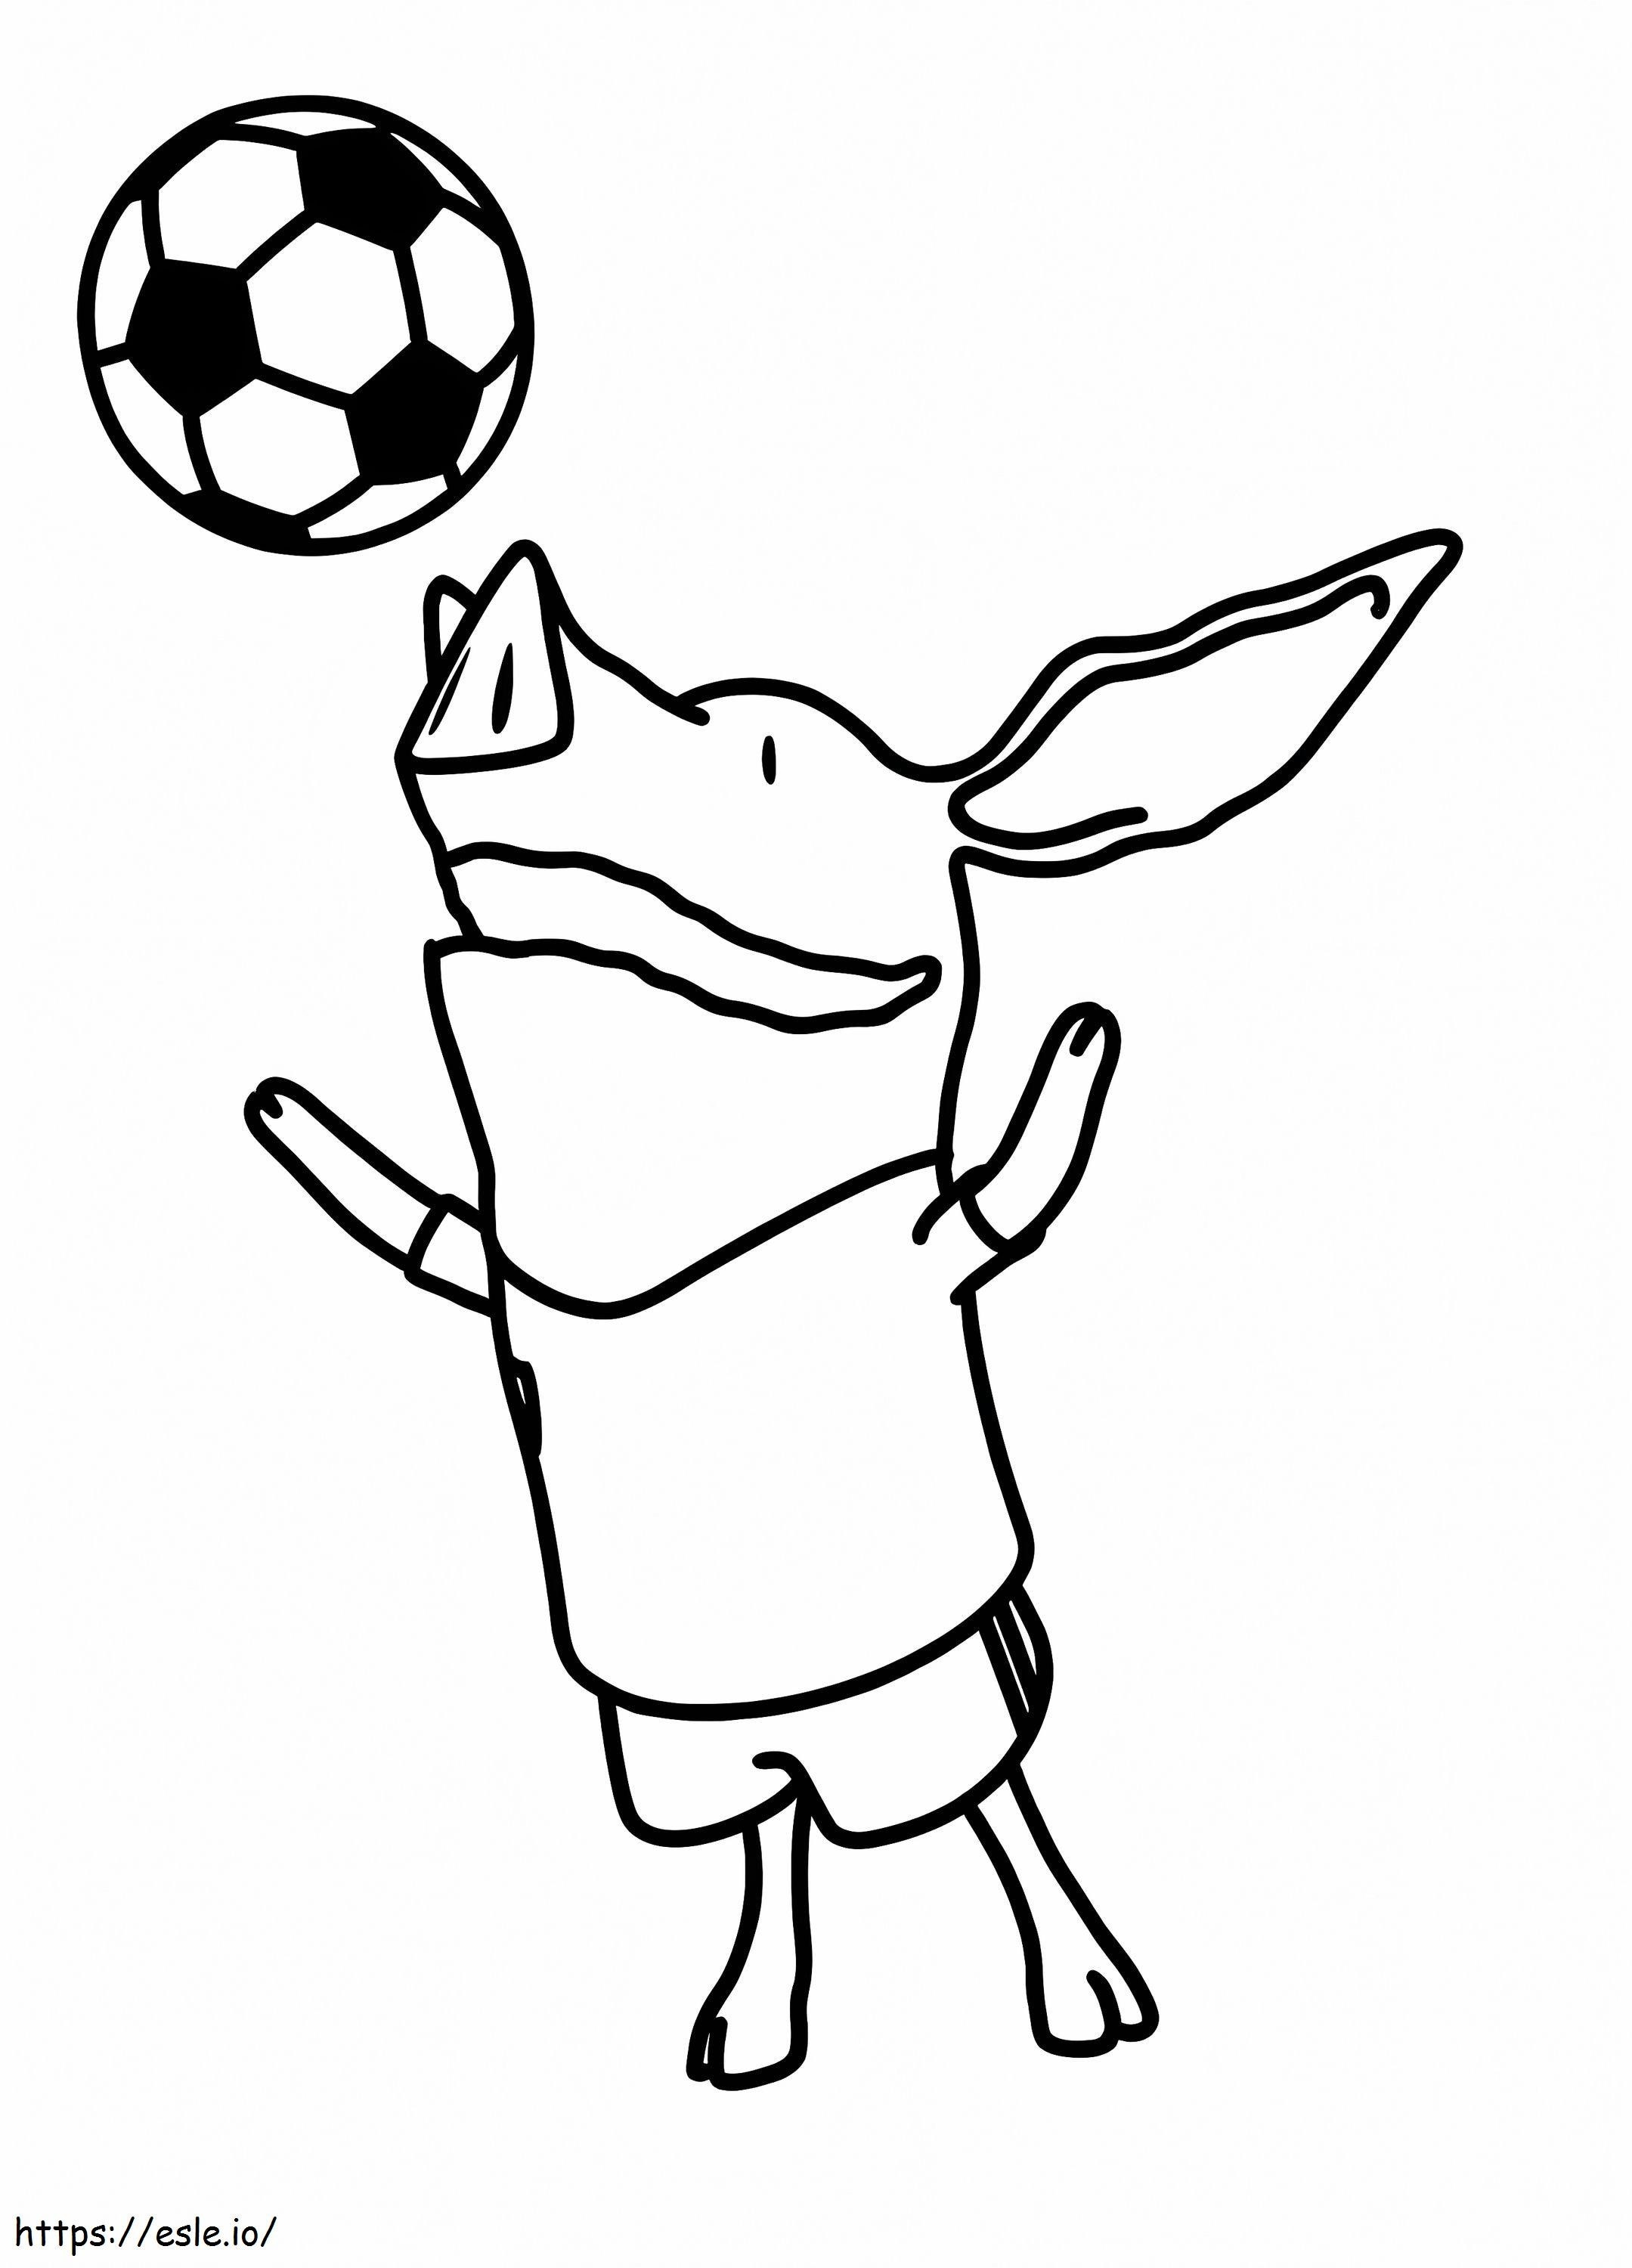 Ian Pig Playing Football coloring page